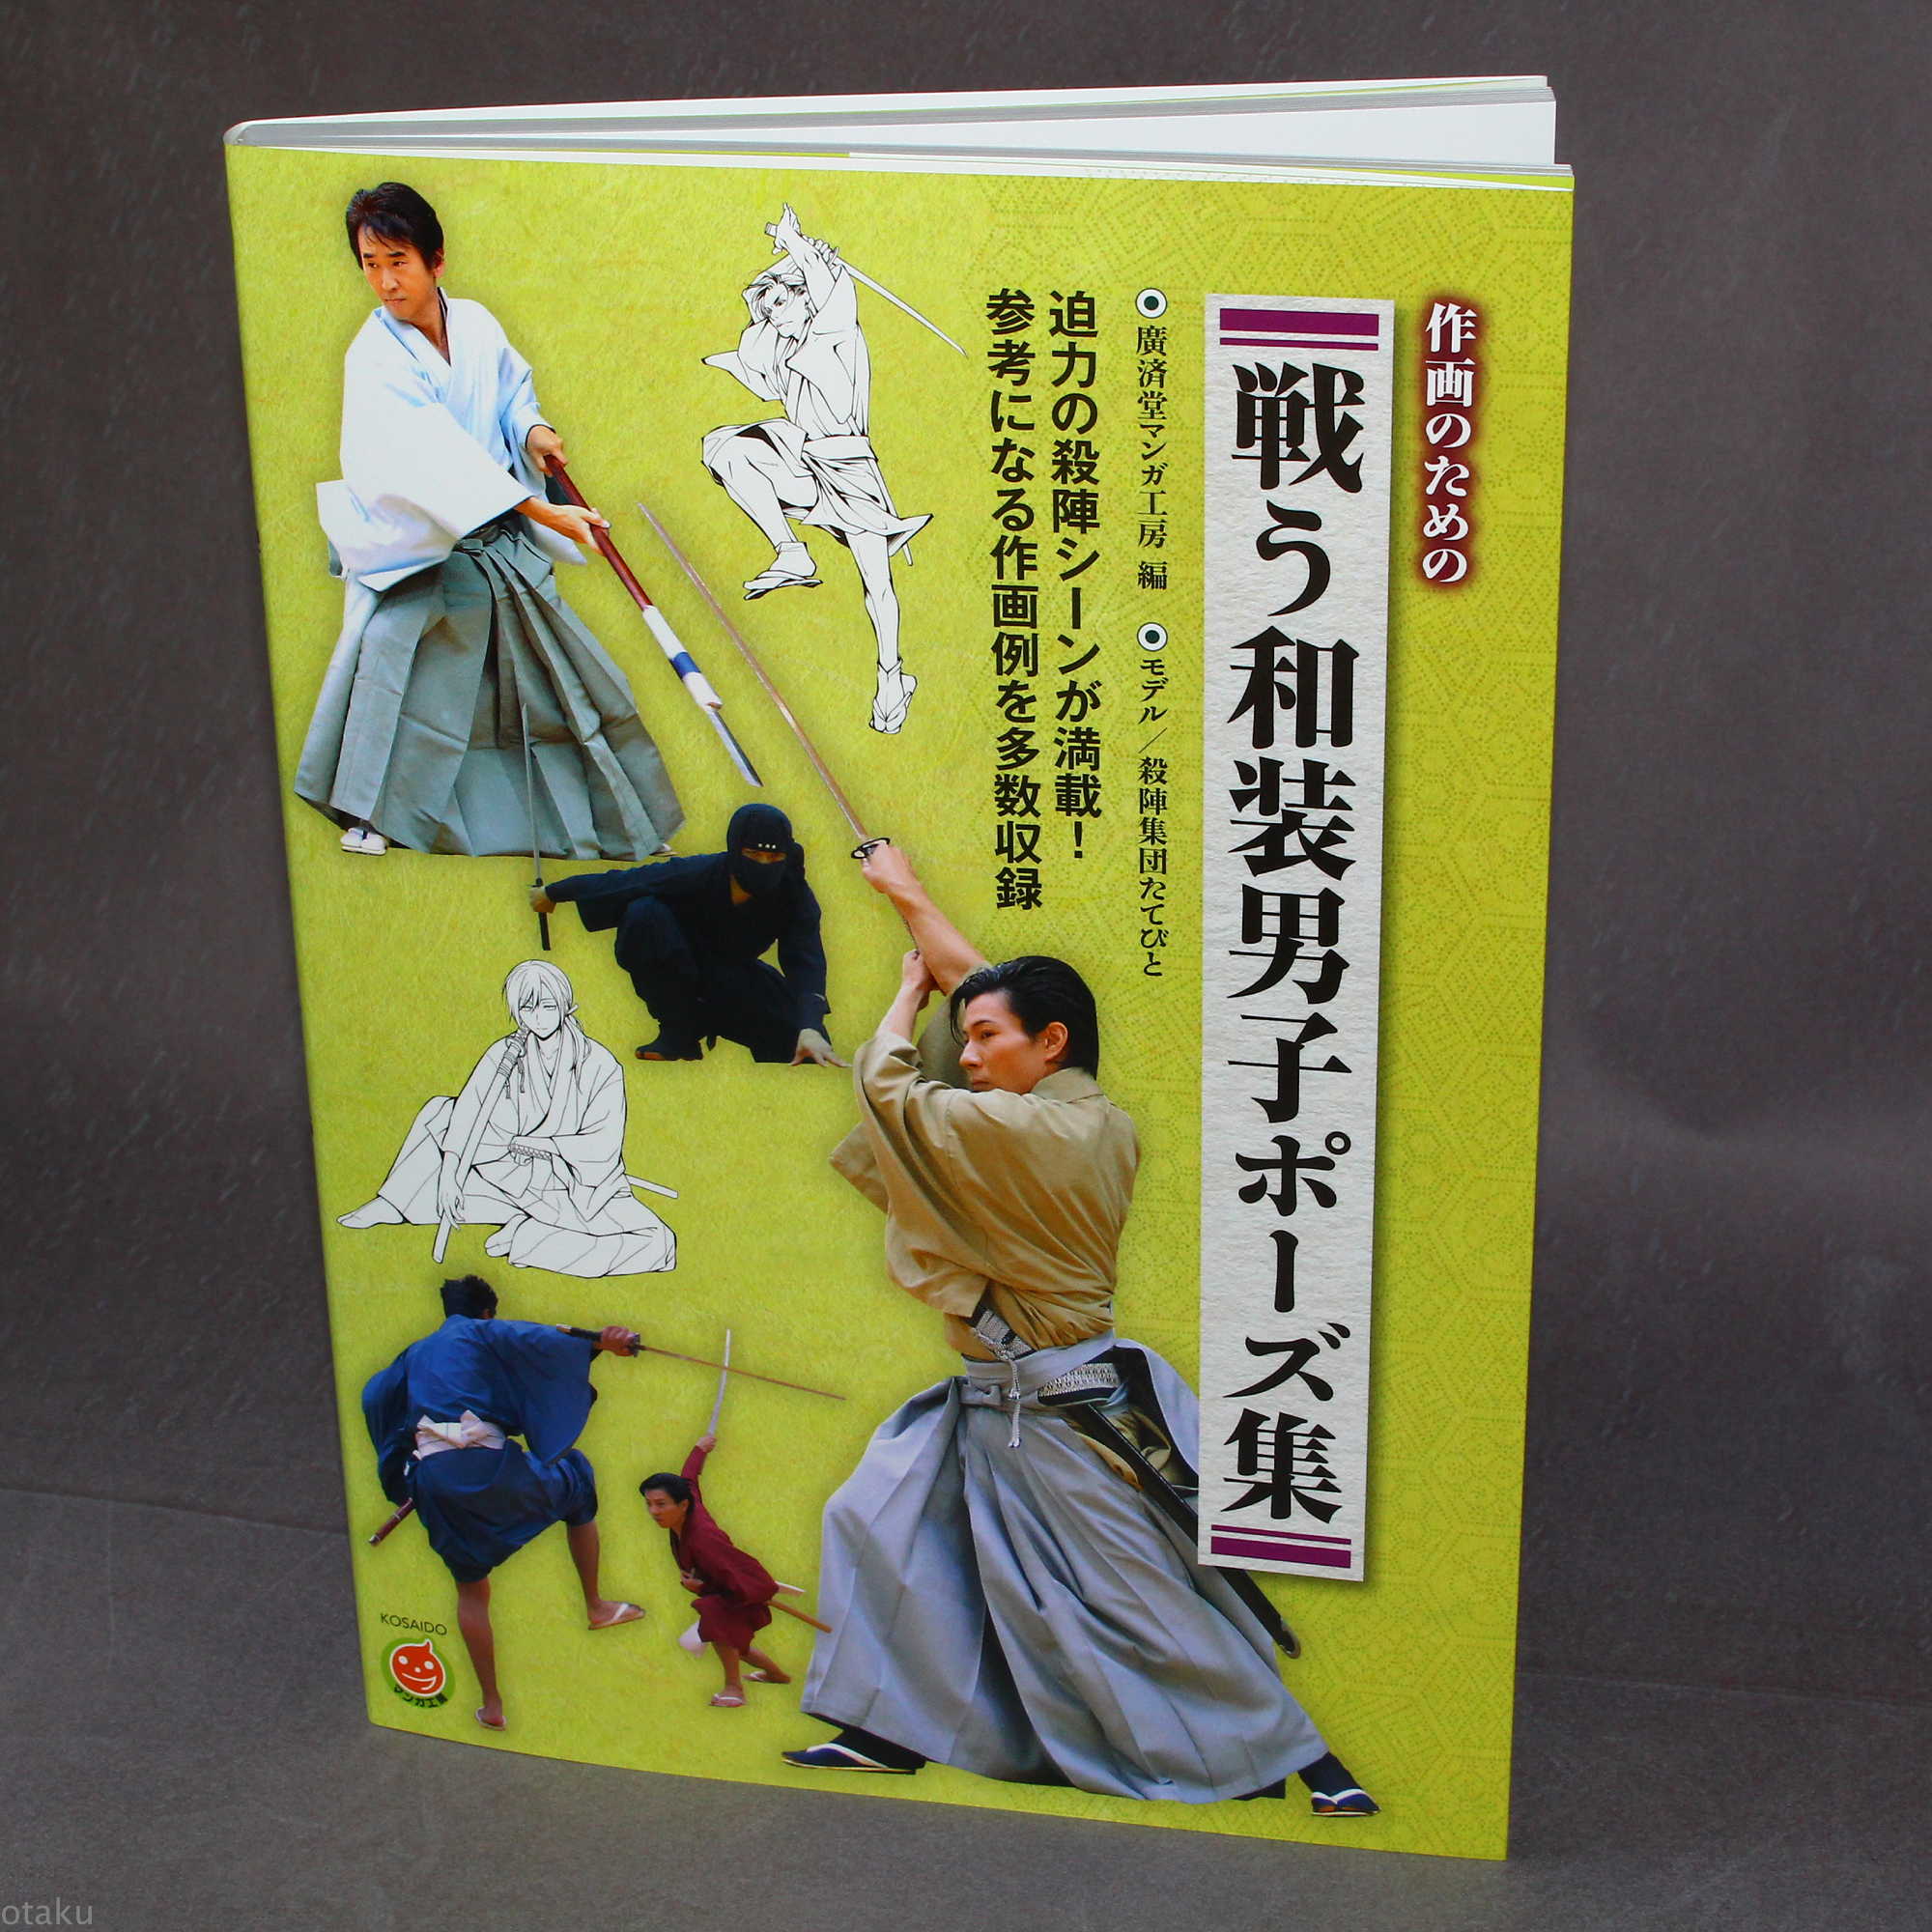 Kimono And Sword Combat Poses Japan How To Draw Art Book